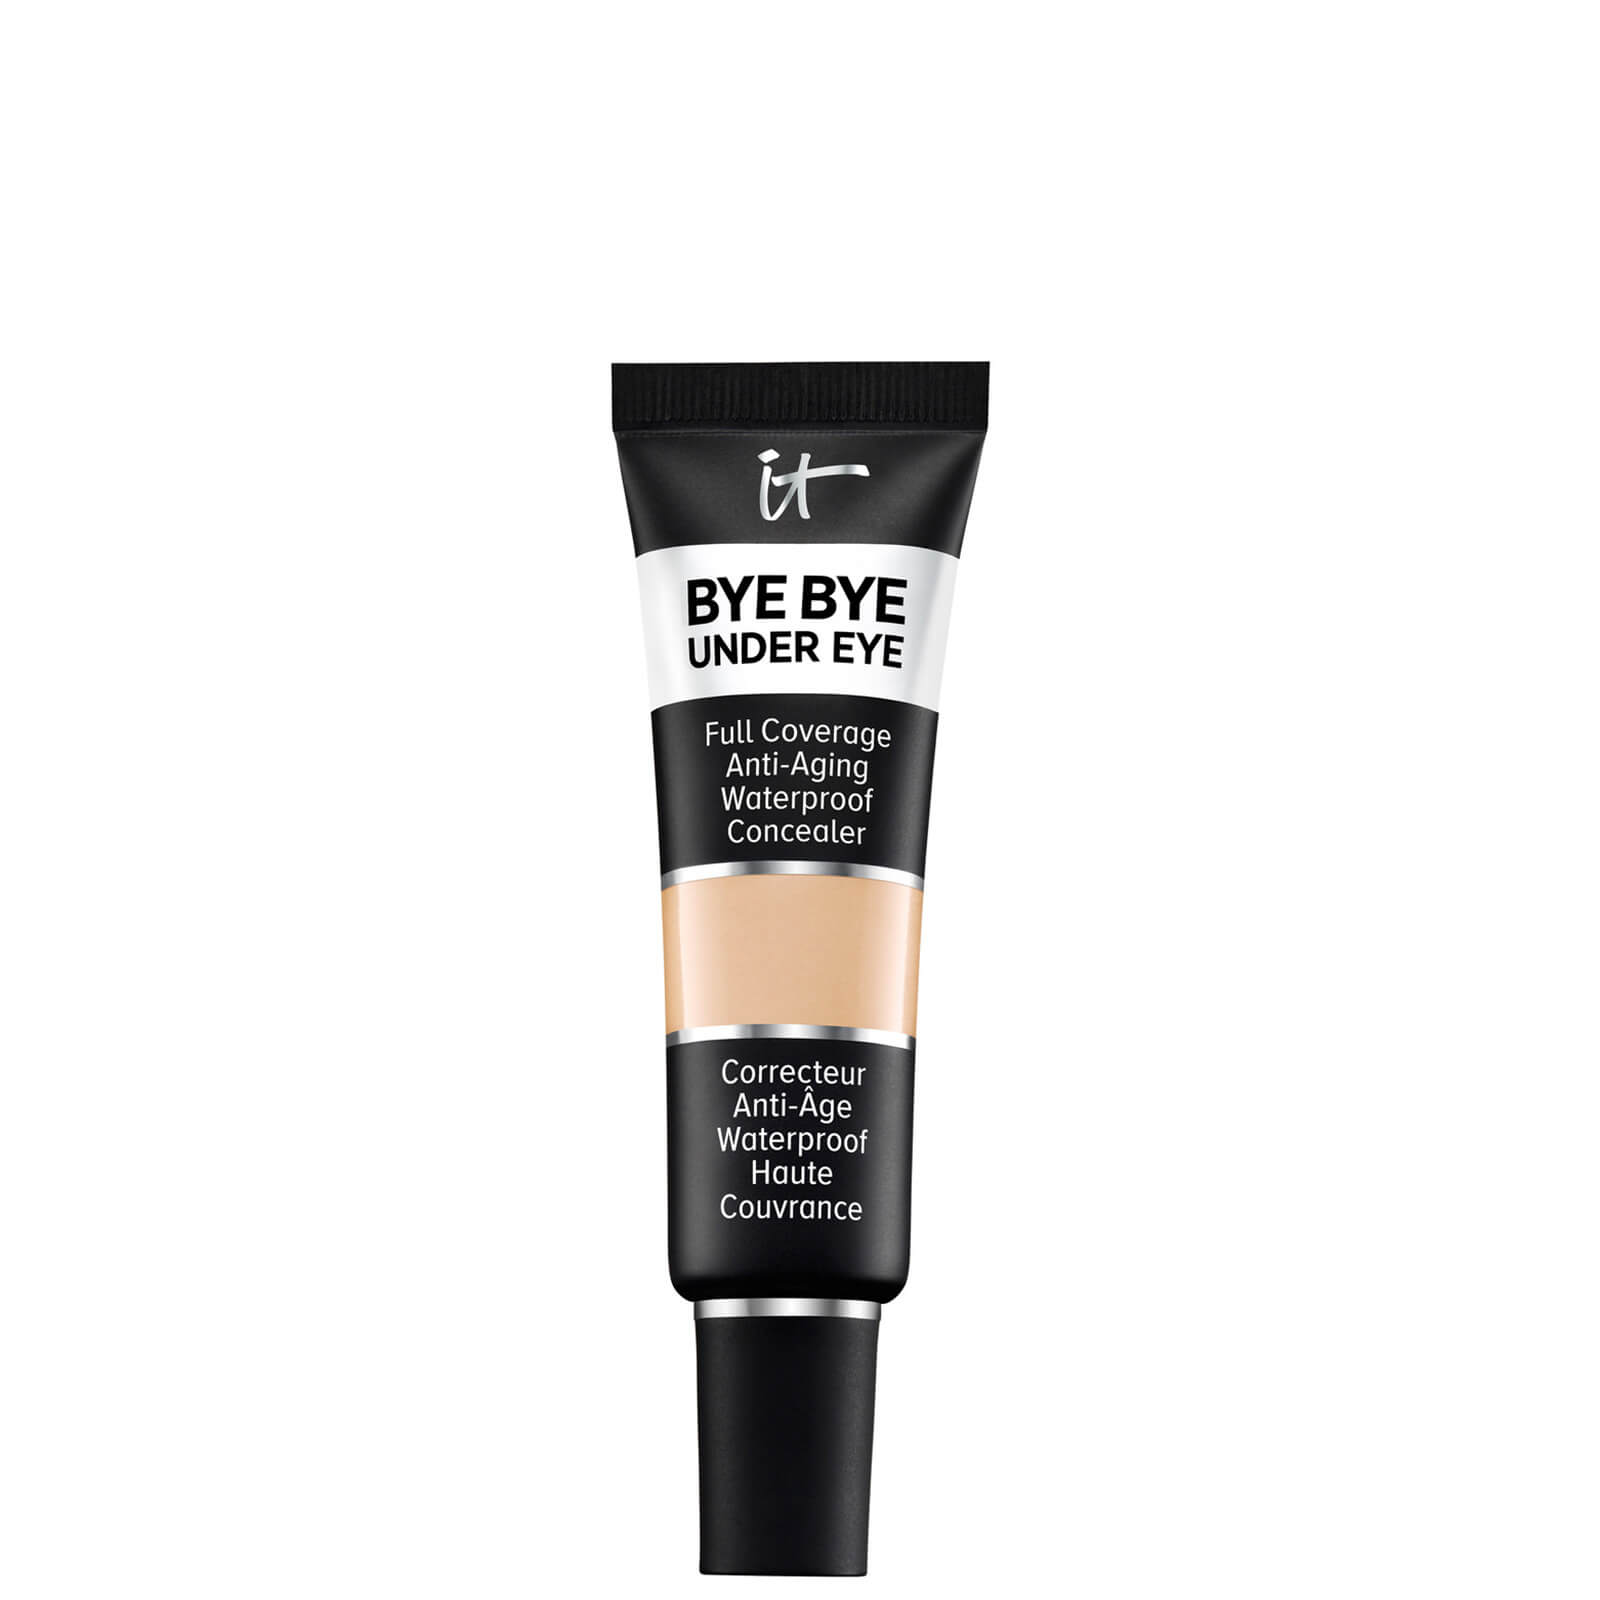 IT Cosmetics Bye Bye Under Eye Concealer 12ml (Various Shades) - Light Tan 14.0